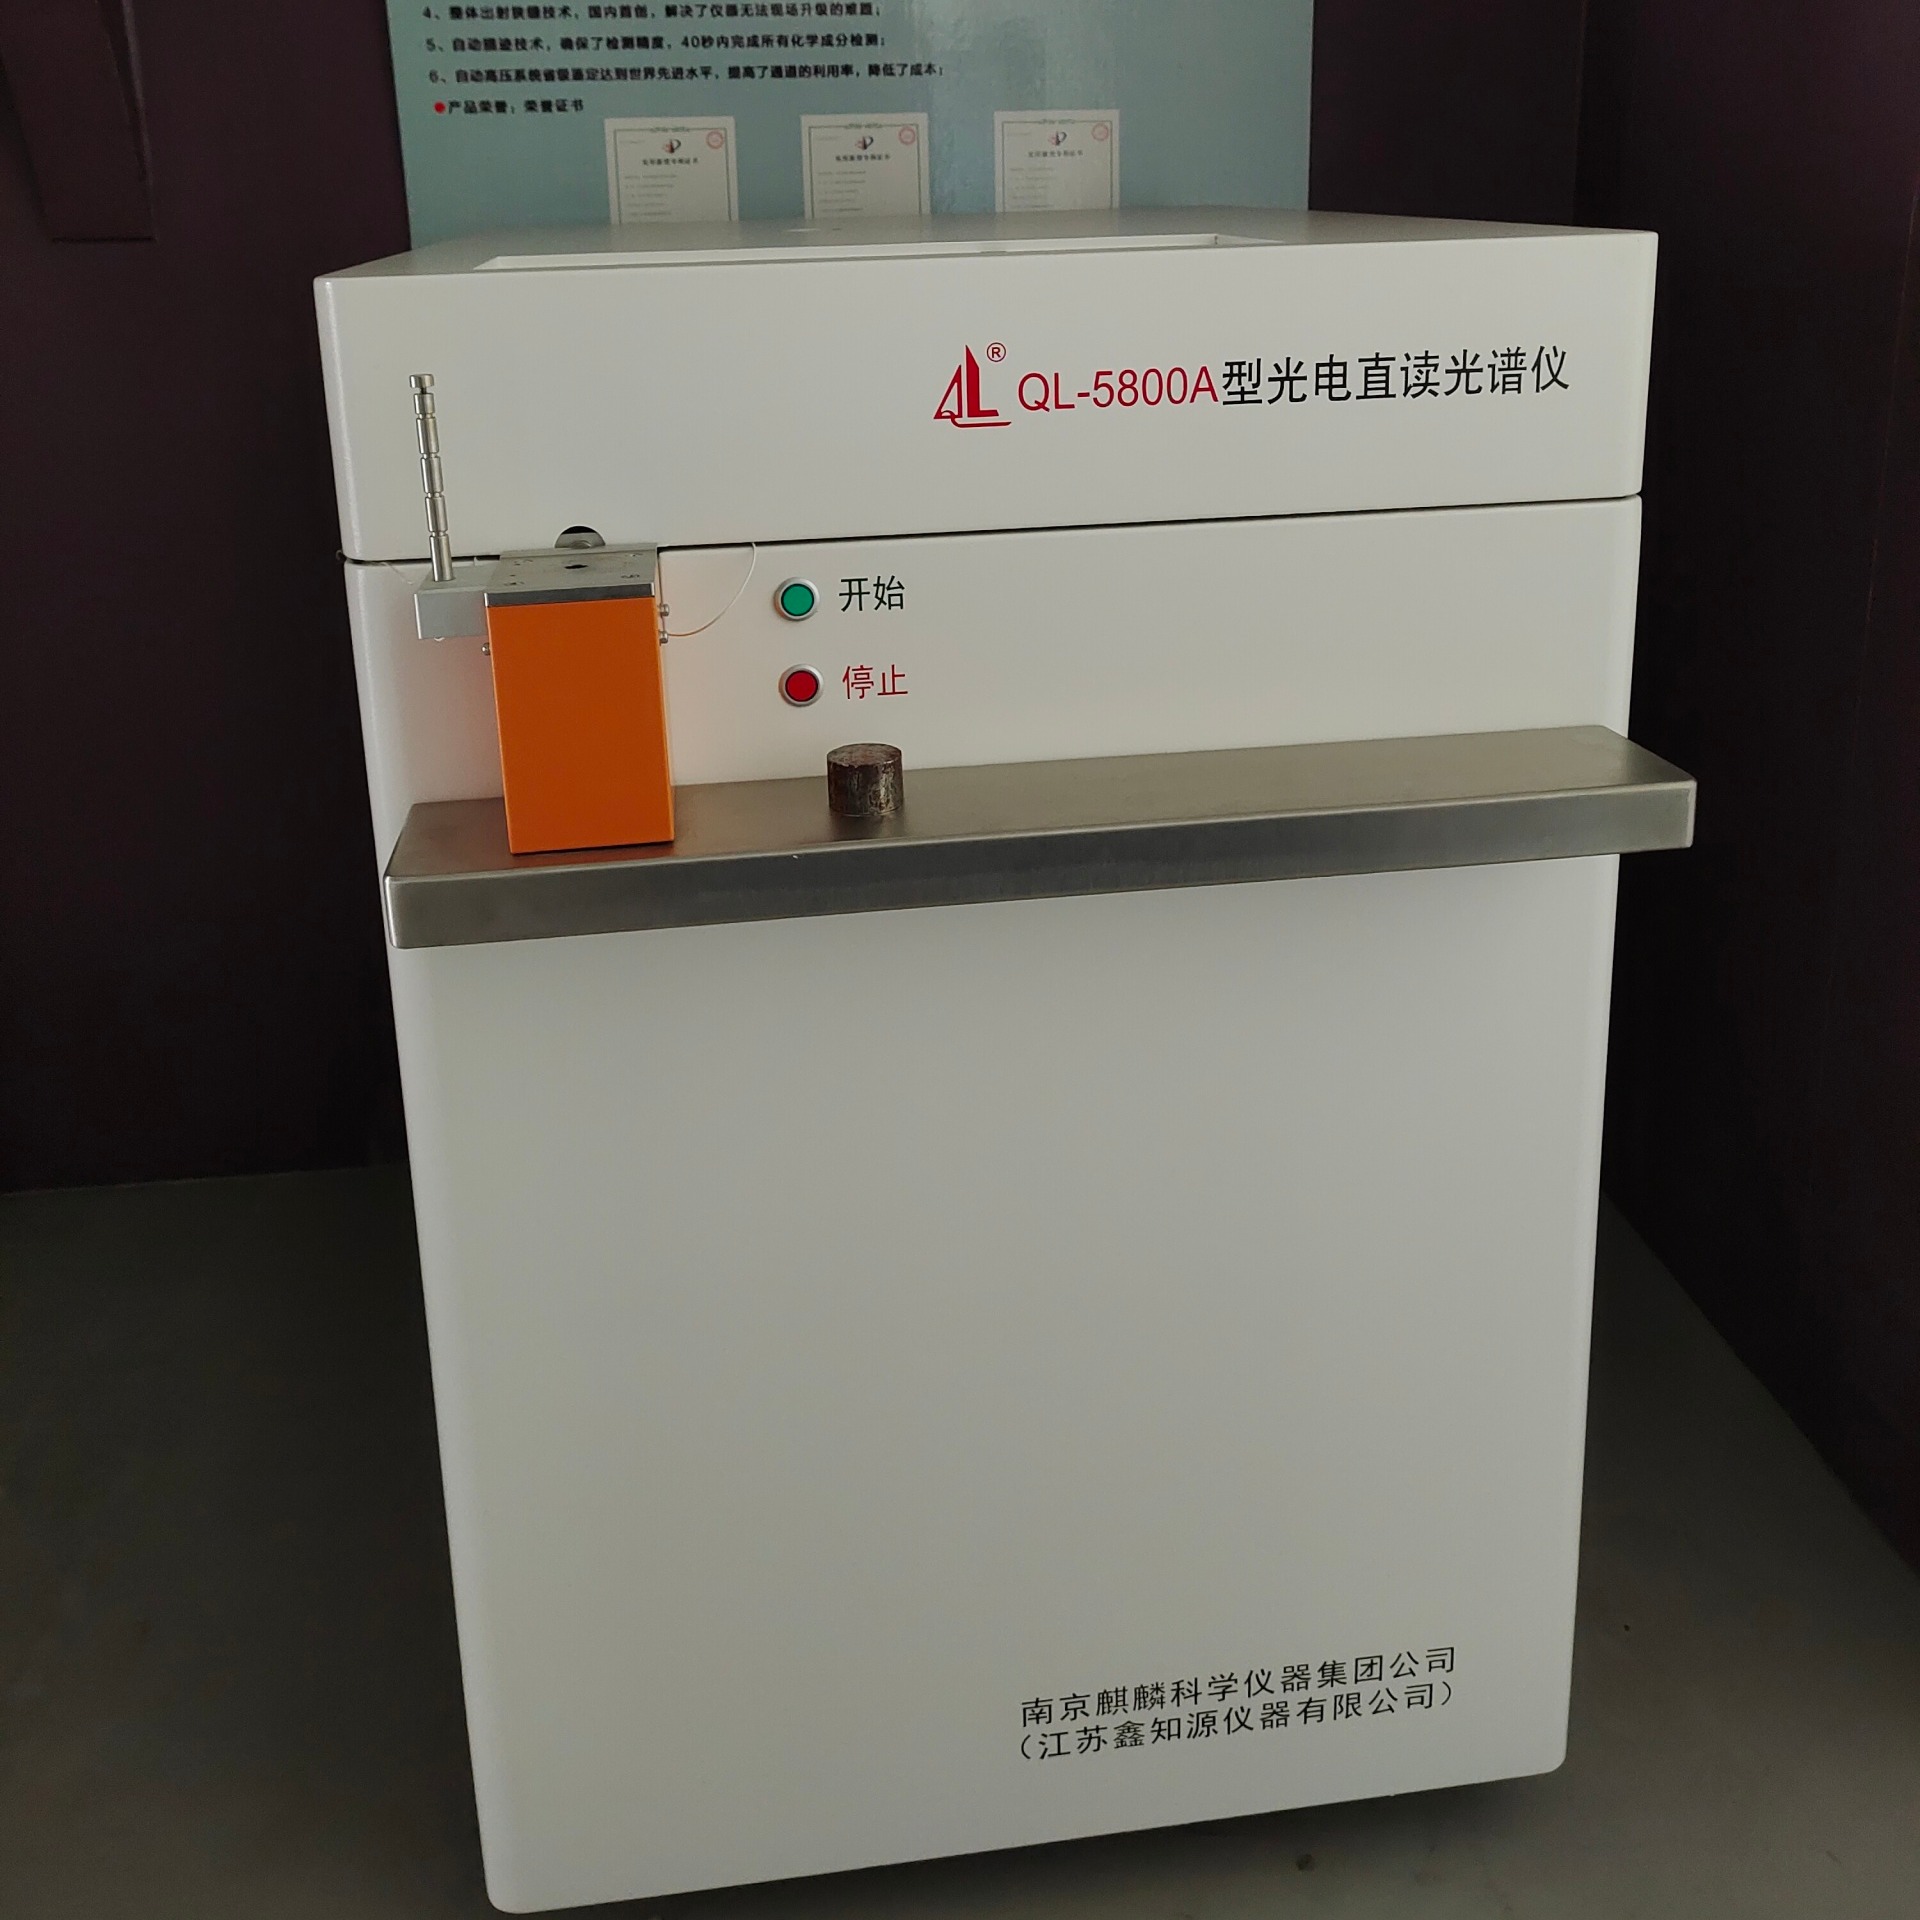 QL-5800A型南京麒麟光电直读光谱仪